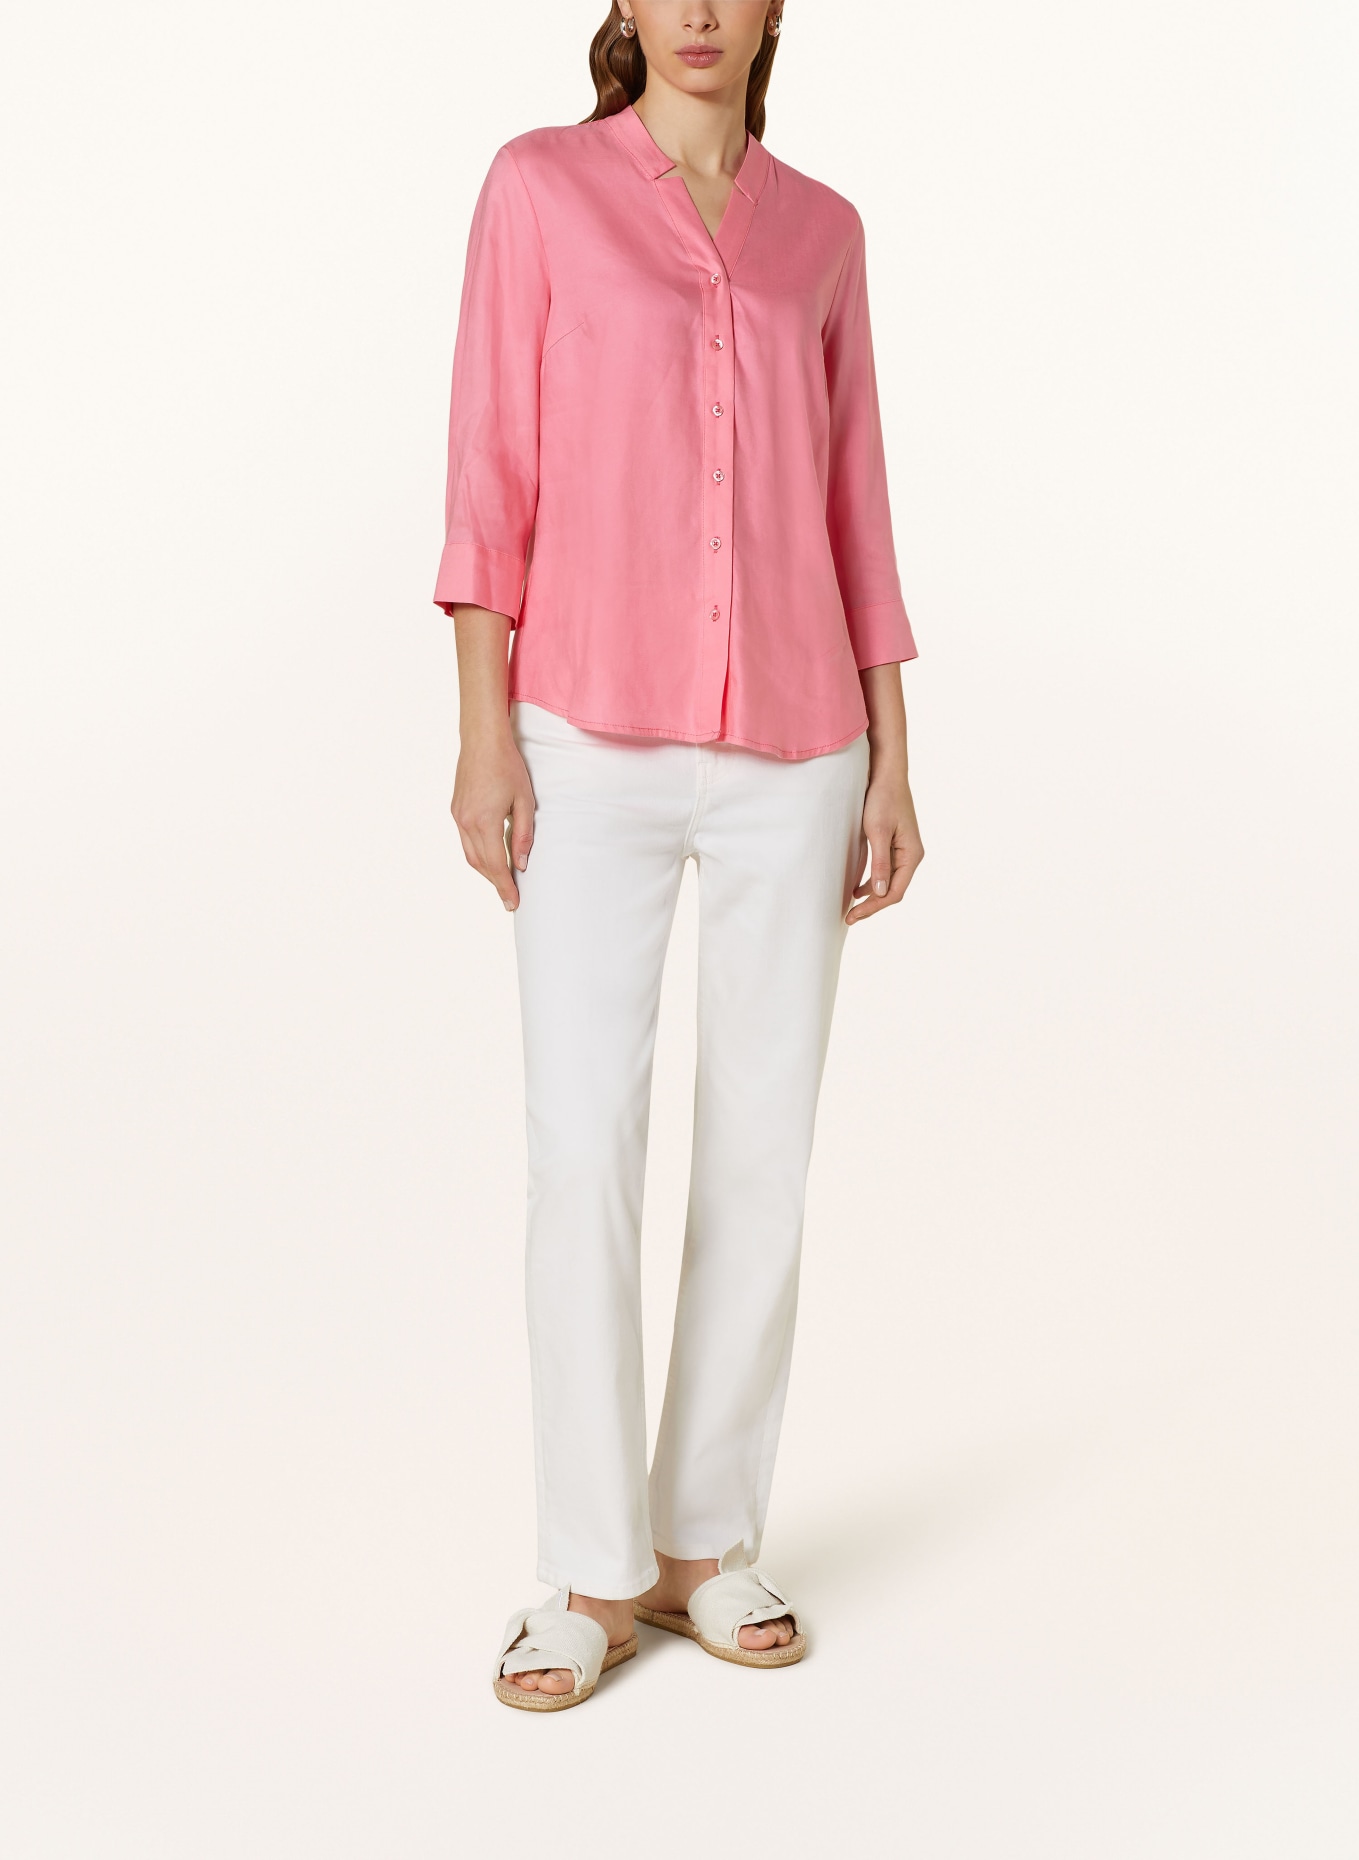 MORE & MORE Bluse mit 3/4-Arm, Farbe: 0835 sorbet pink (Bild 2)